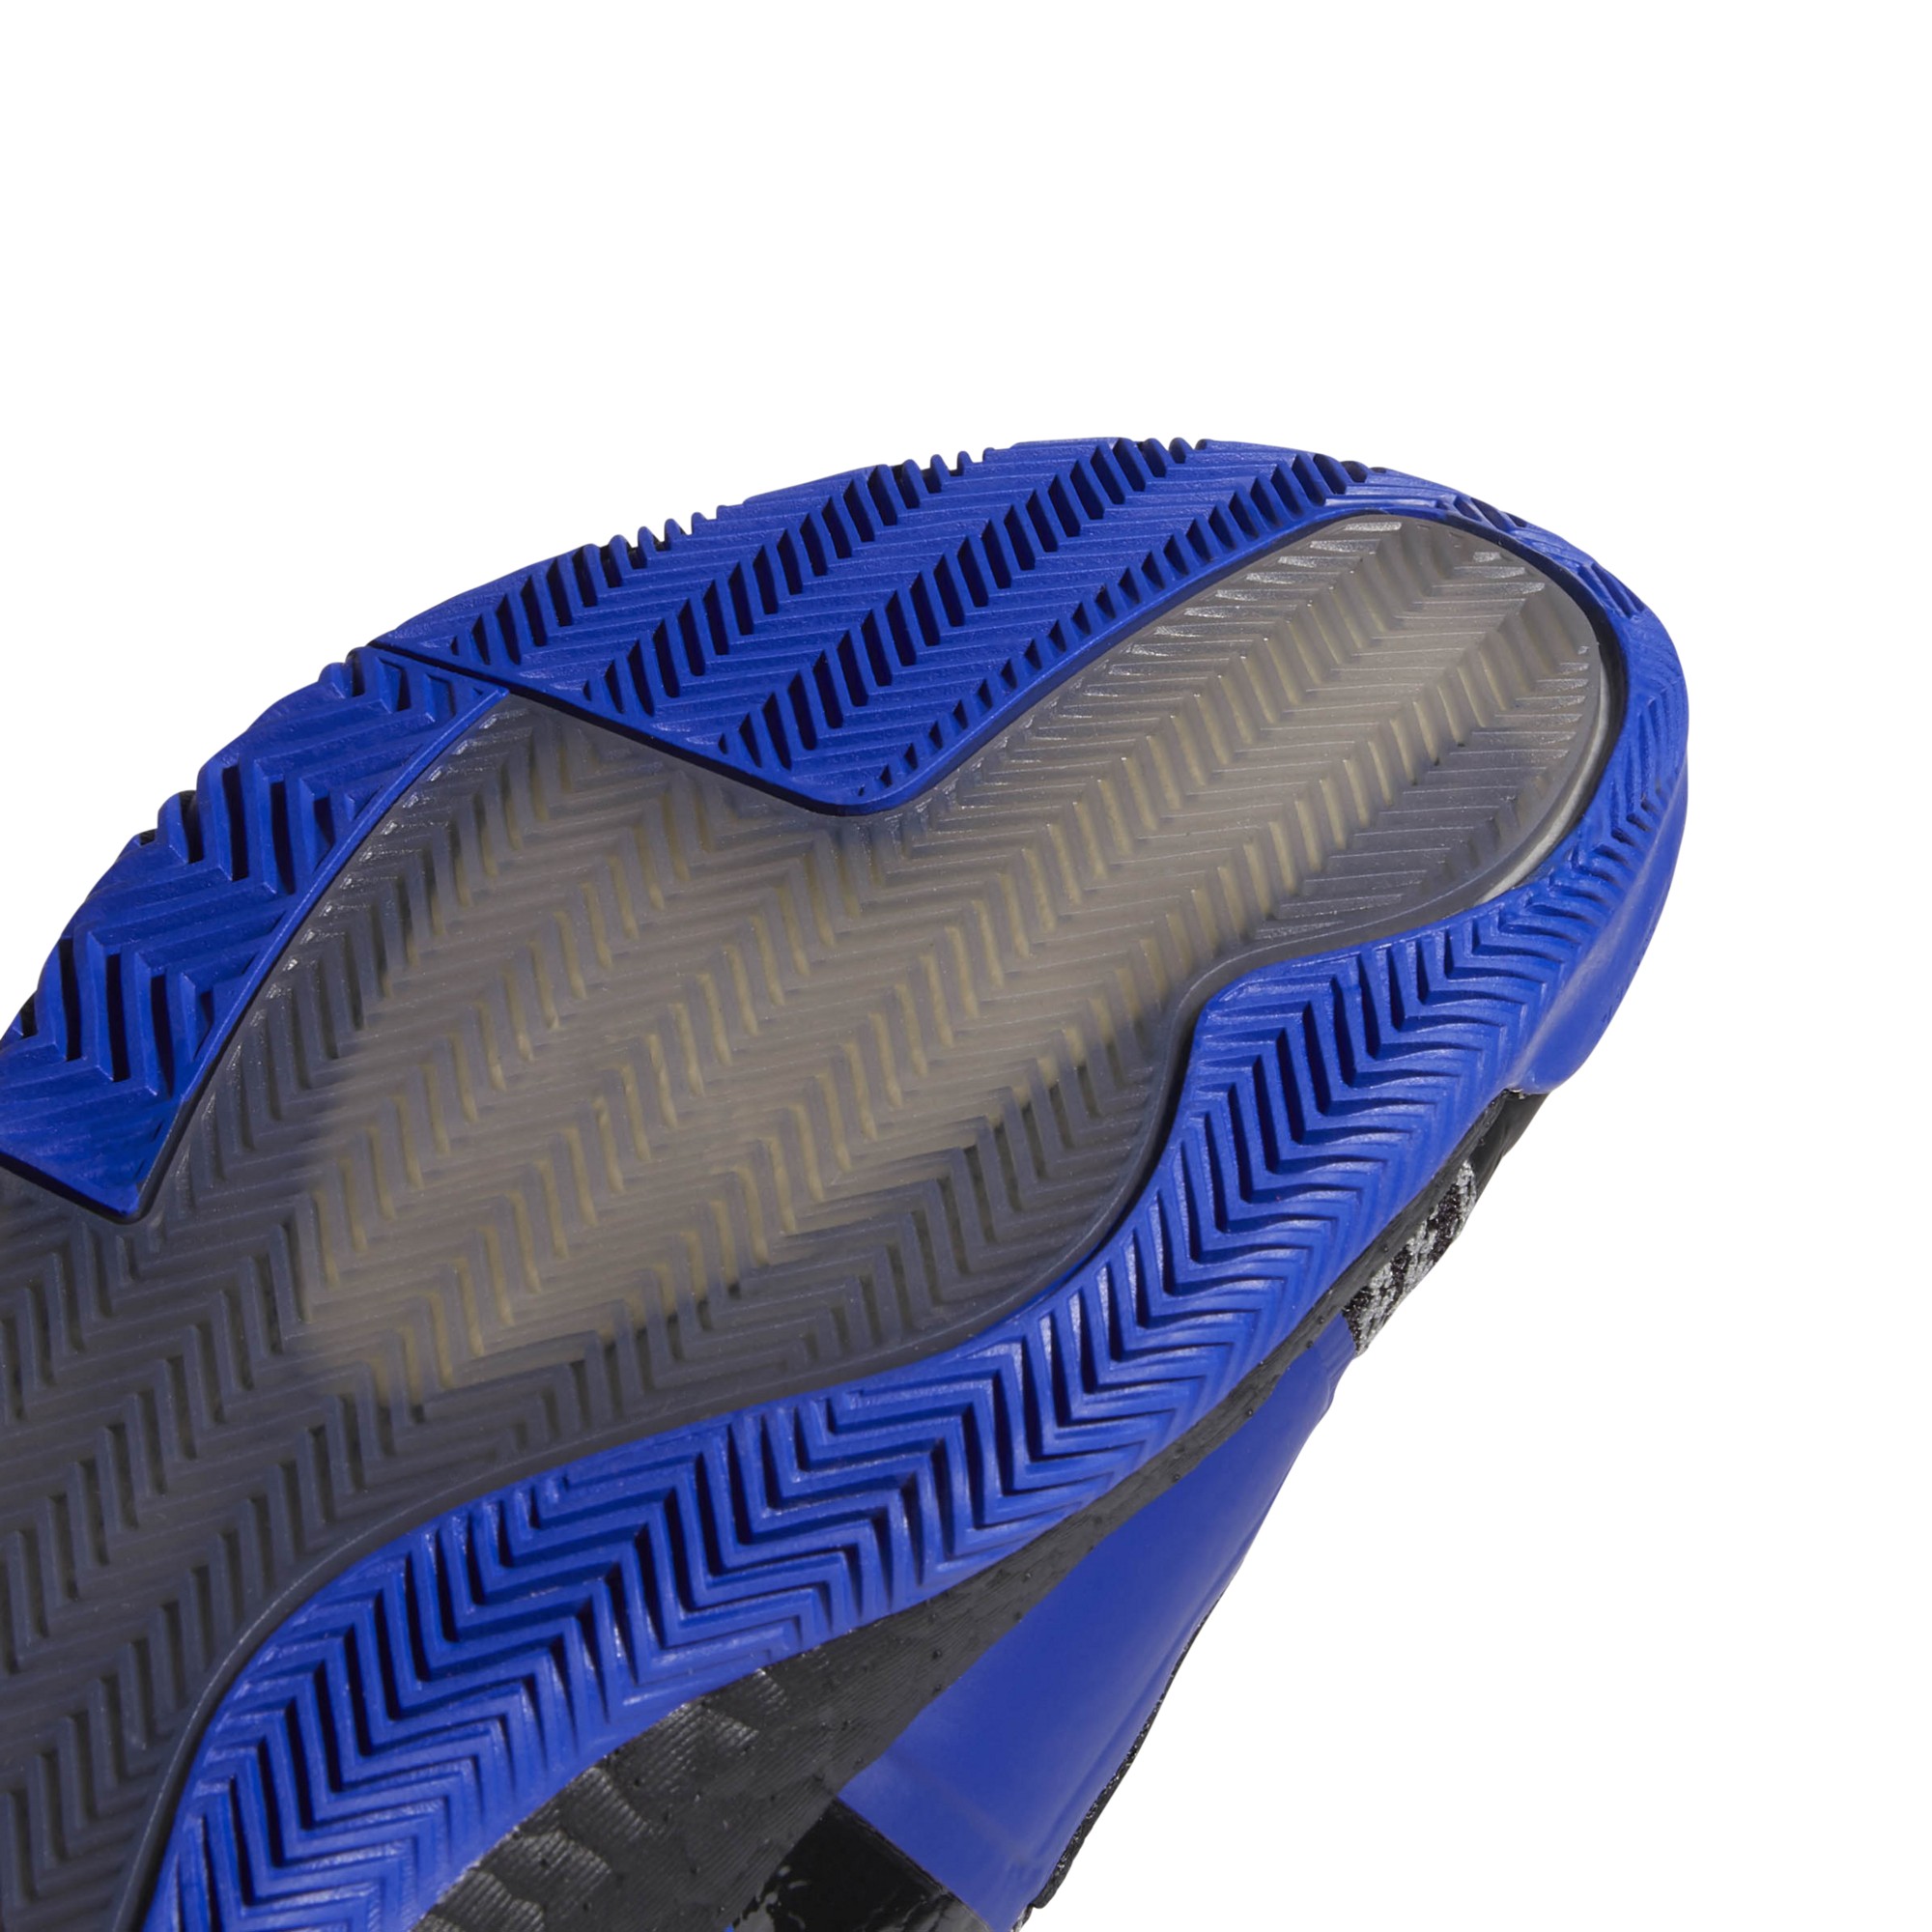 SCARPE ADIDAS HARDEN VOL. 3 \\"BLACK ACTIVE BLUE\\" G26811 Adidas Scarpe Tecniche - Basket 112,00 €